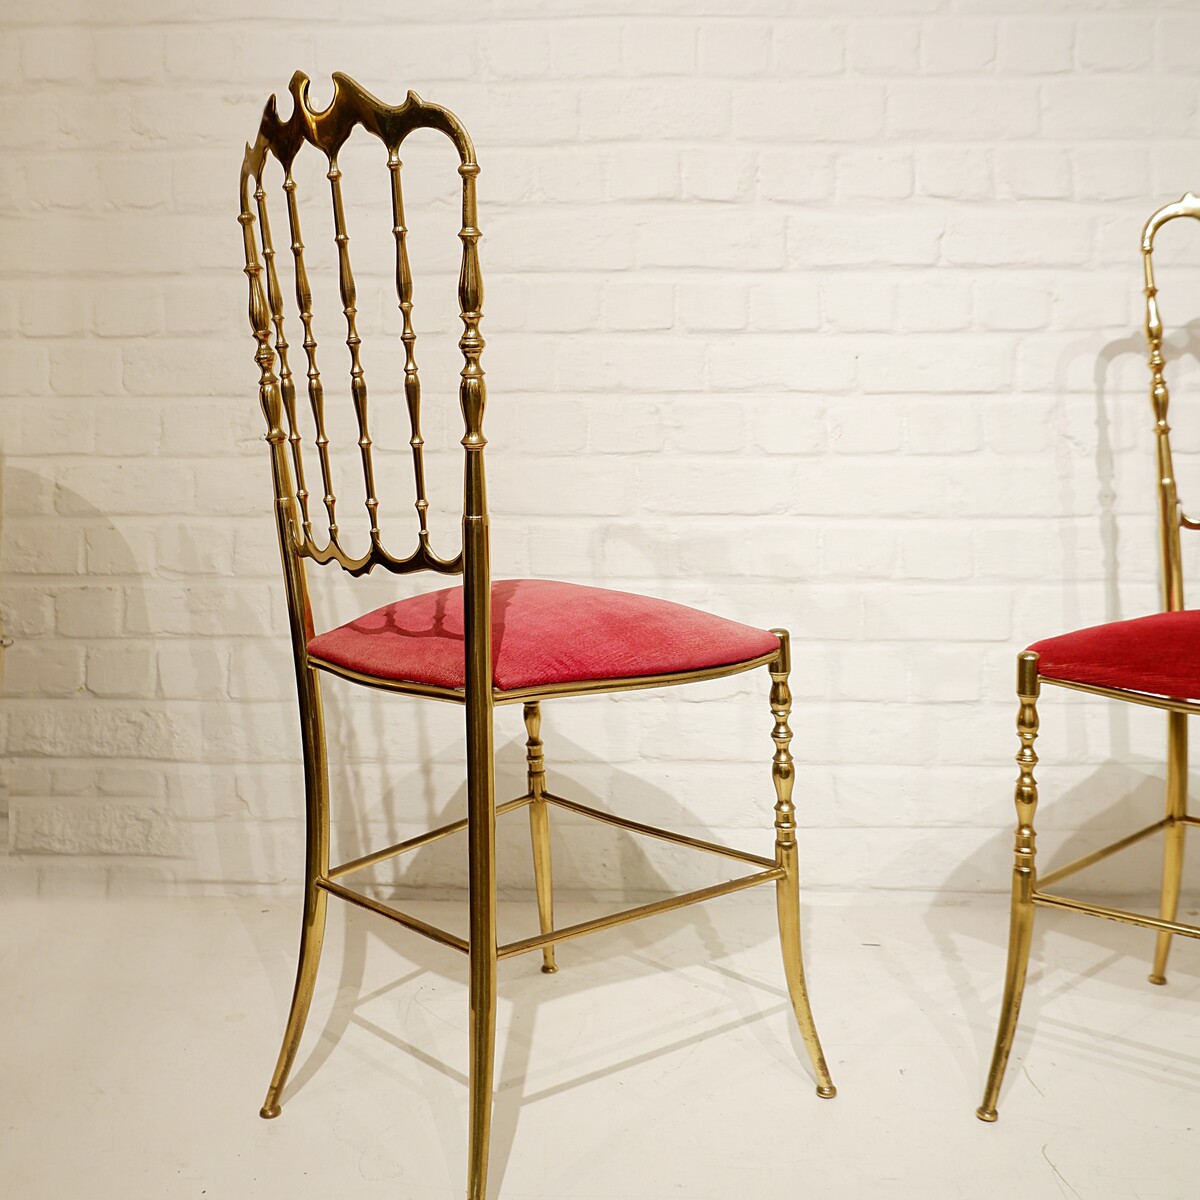 Polished Gilt Brass Chiavari Ballroom Chairs - 3 available (price per piece)